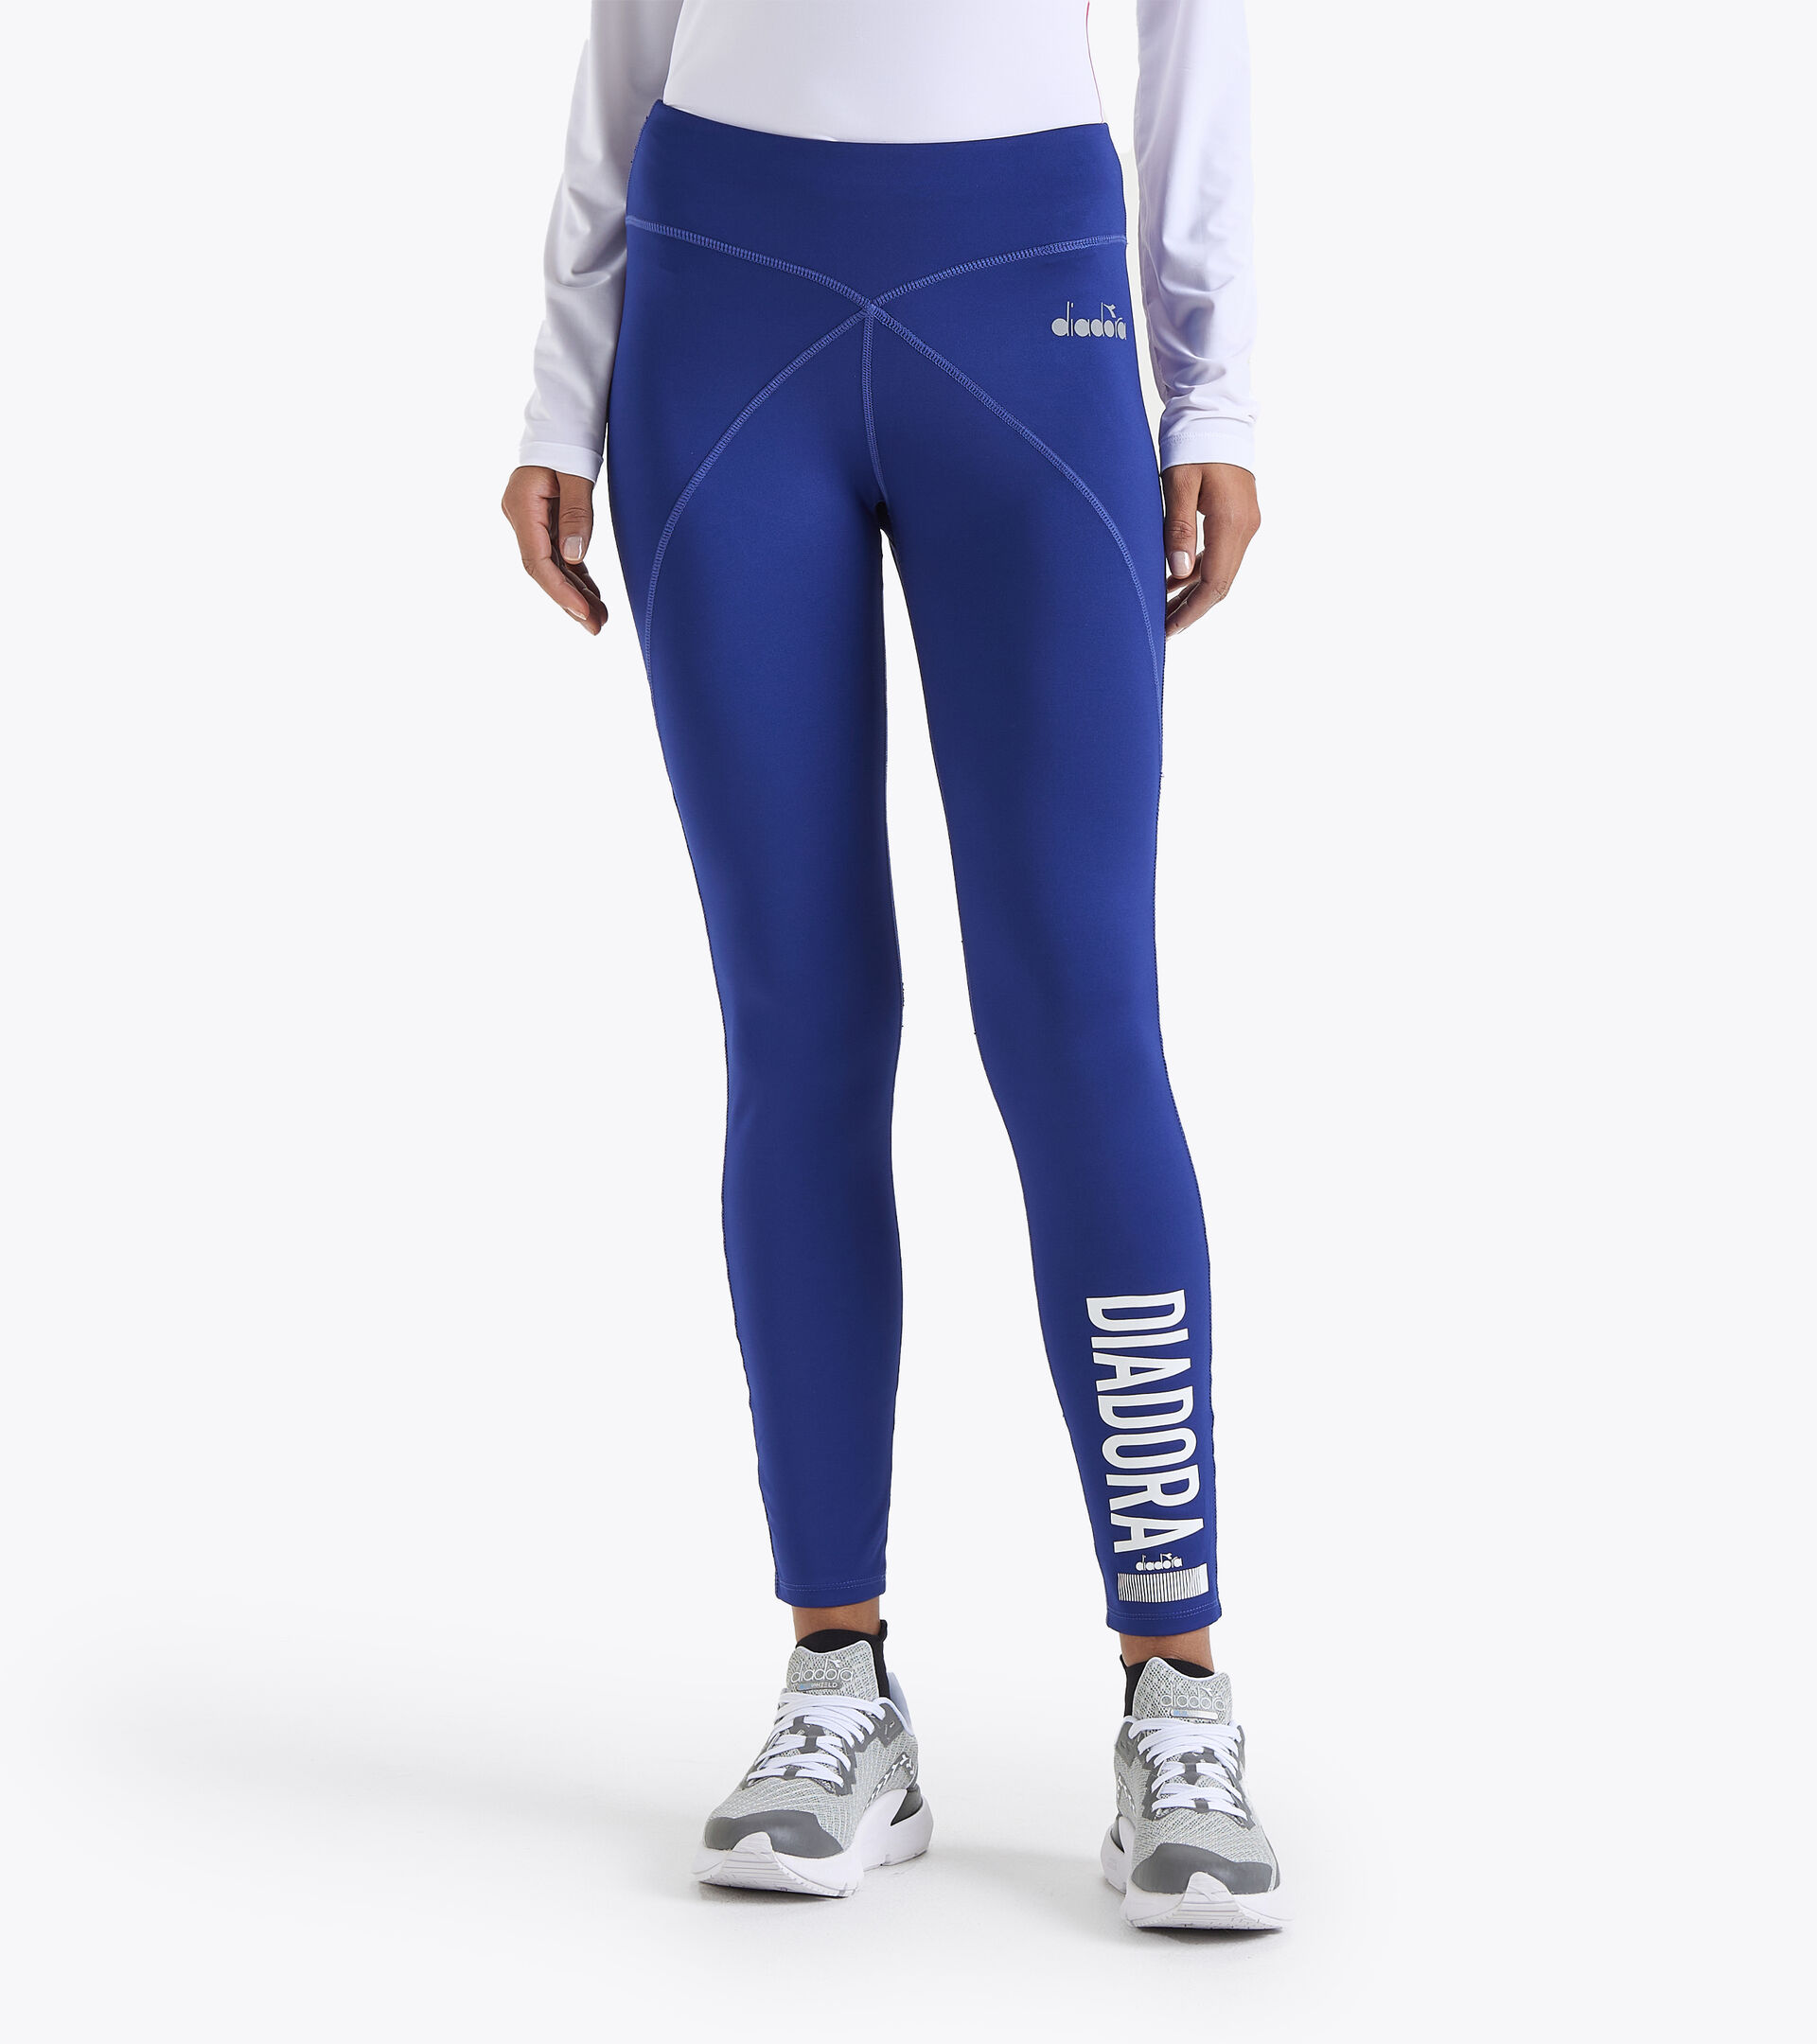 L. TIGHTS RUN CREW Running leggings - Women - Diadora Online Store CA